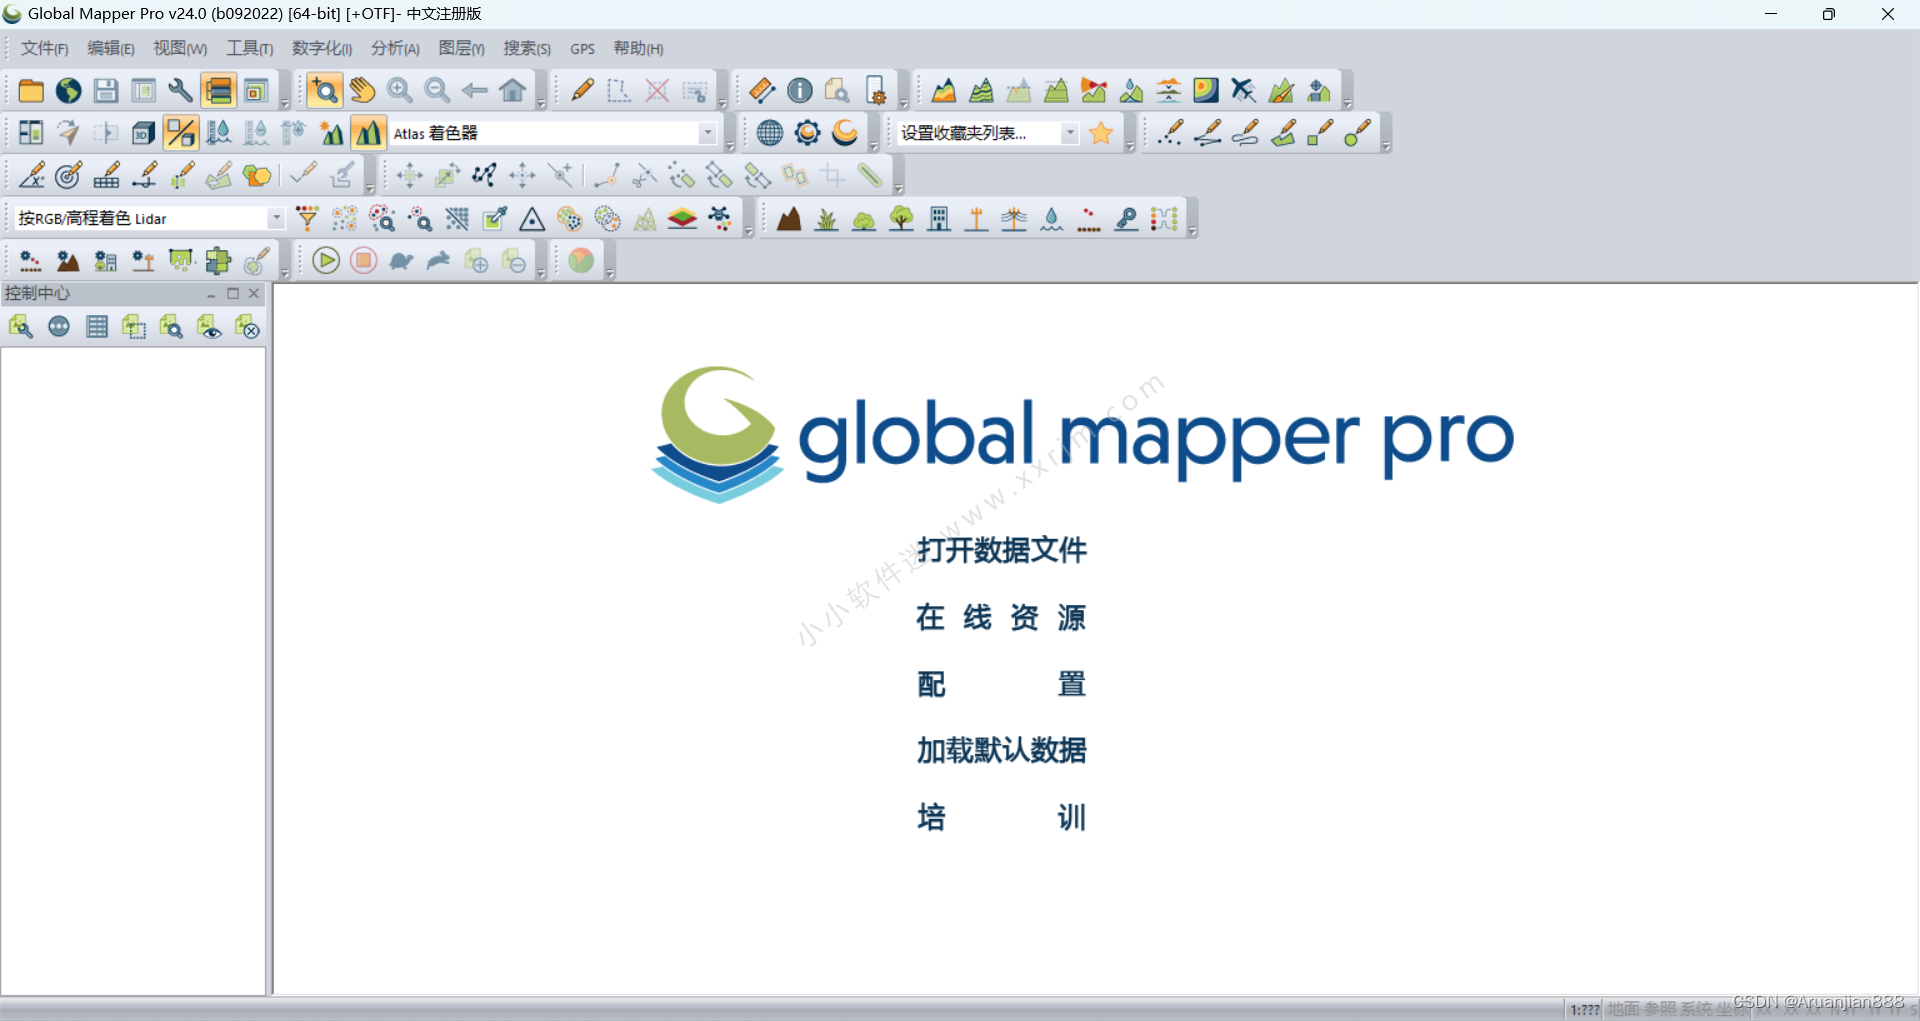 Global Mapper Pro 24.1 Build 022423英文破解版+24.0中文破解版